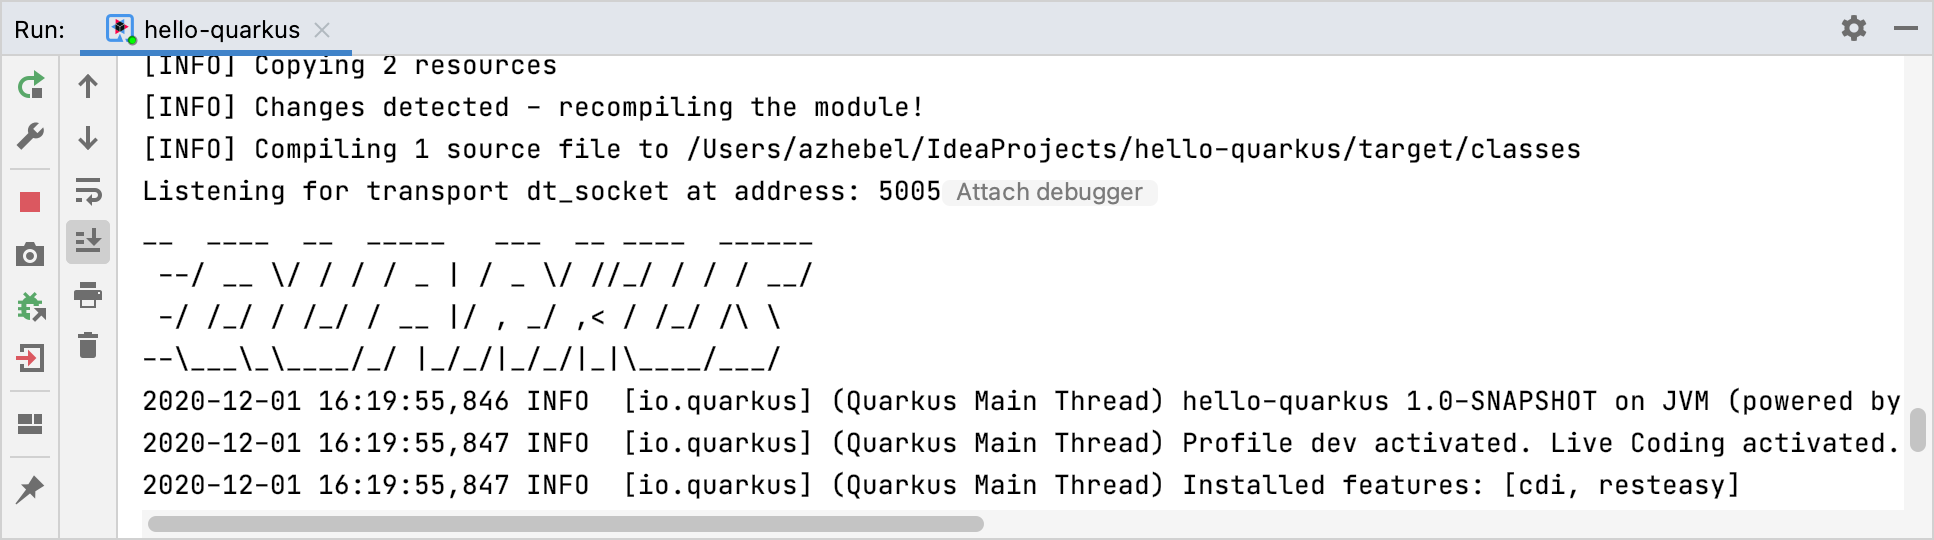 Quarkus application running in the Run tool window